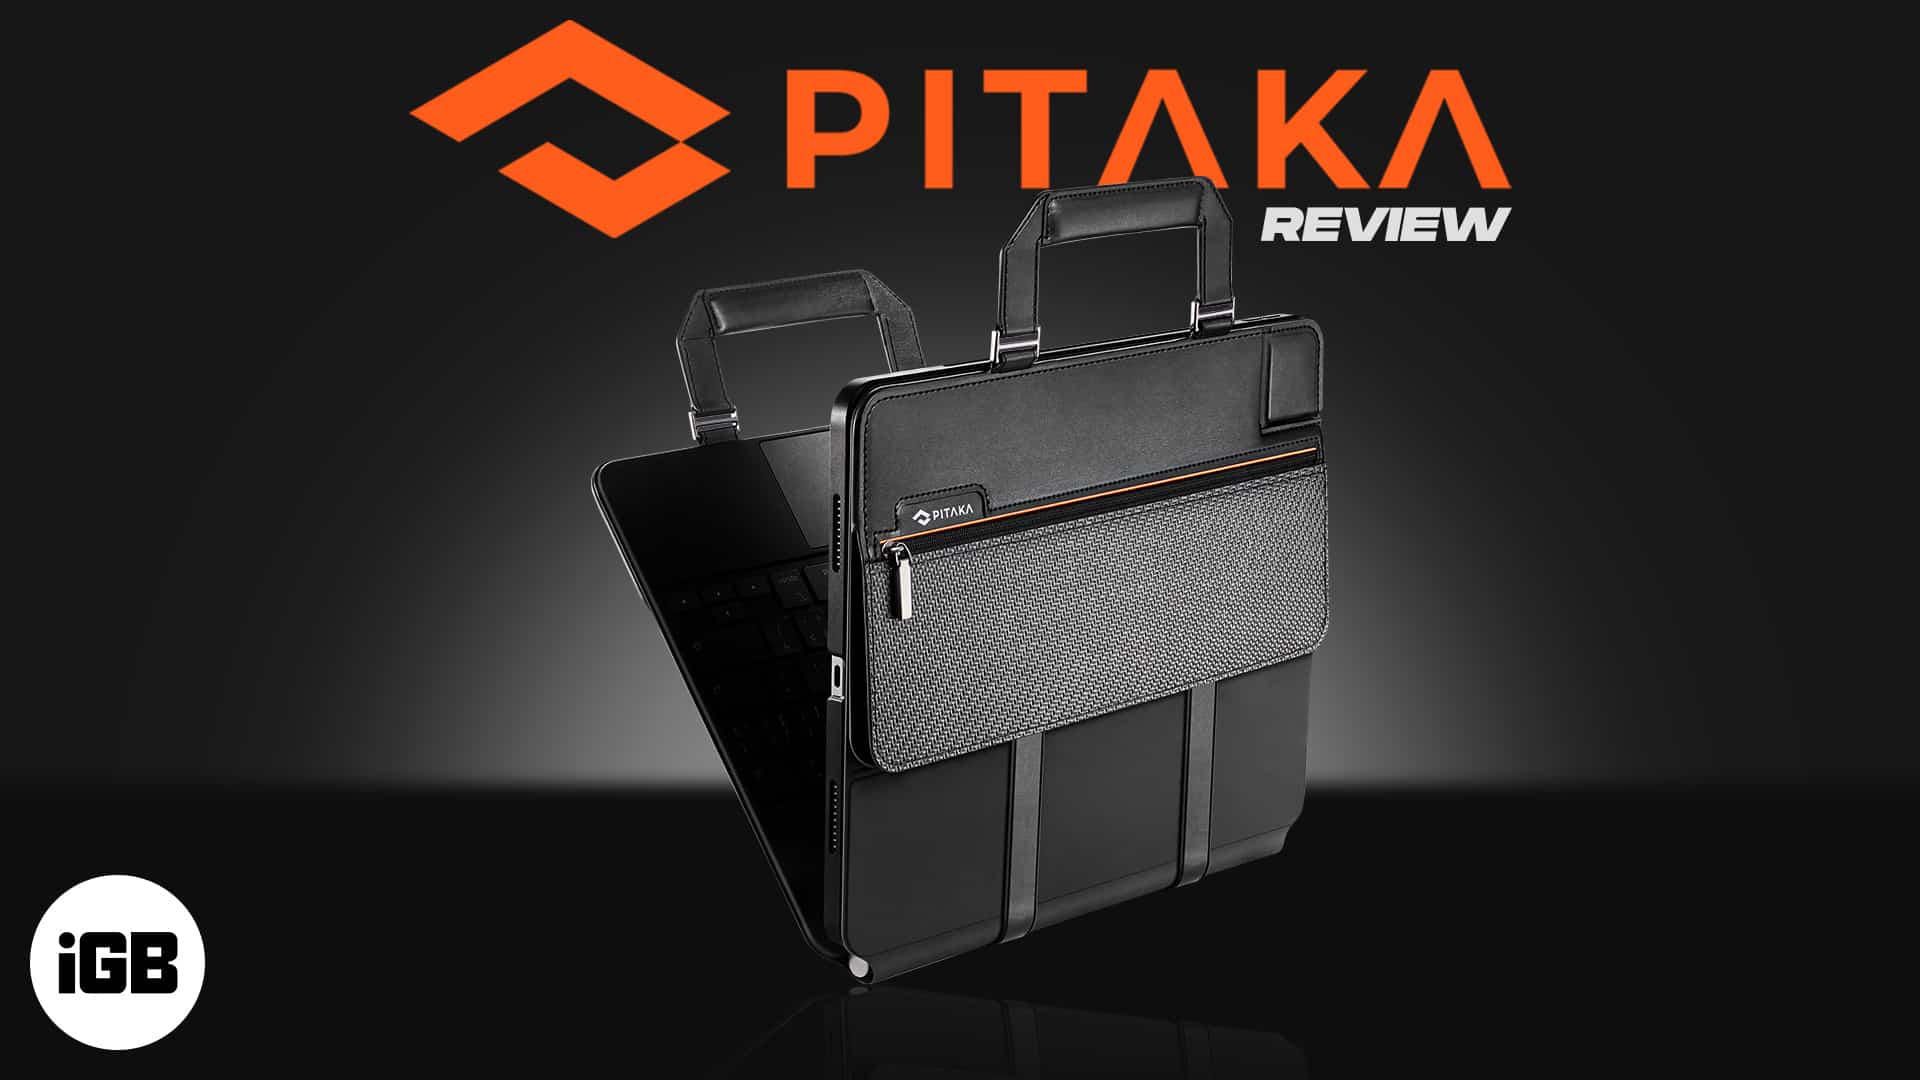 Pitaka flipbook case review